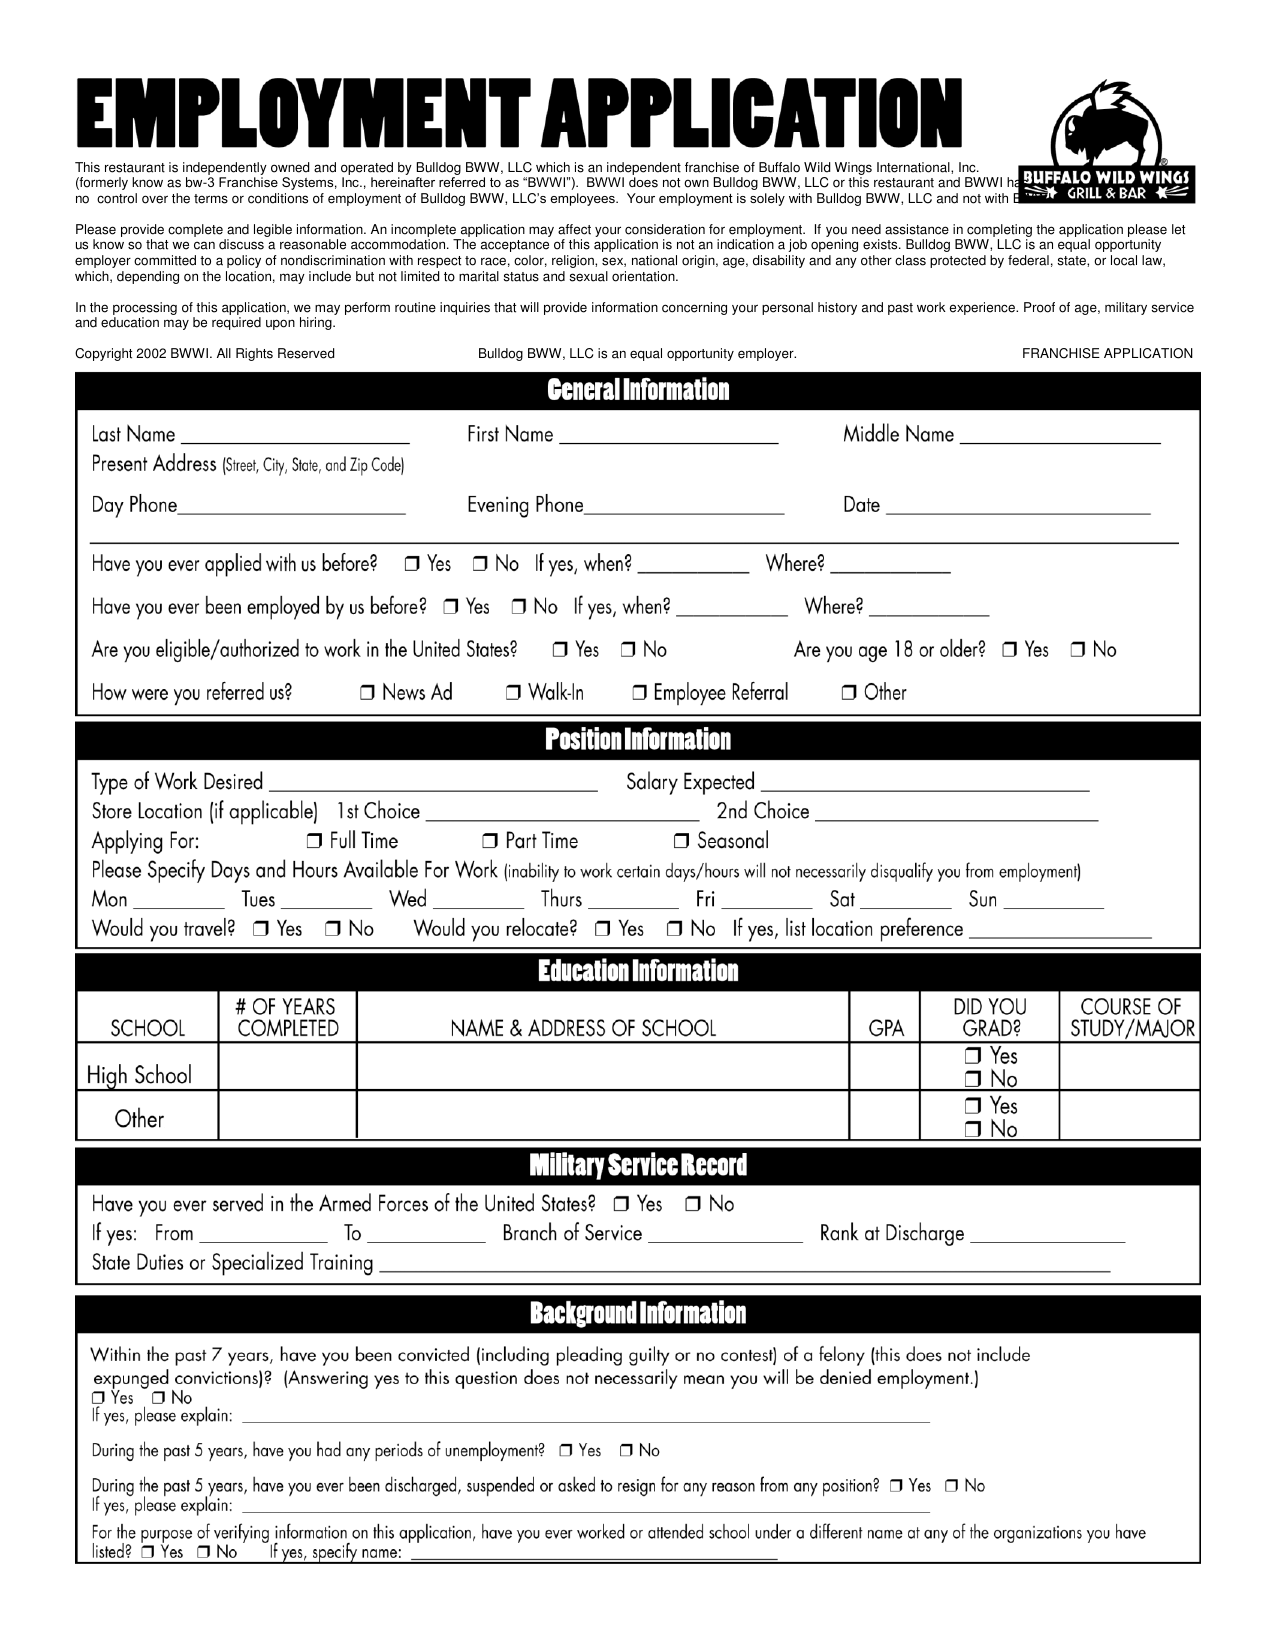 Download Buffalo Wild Wings Job Application Form Careers PDF 